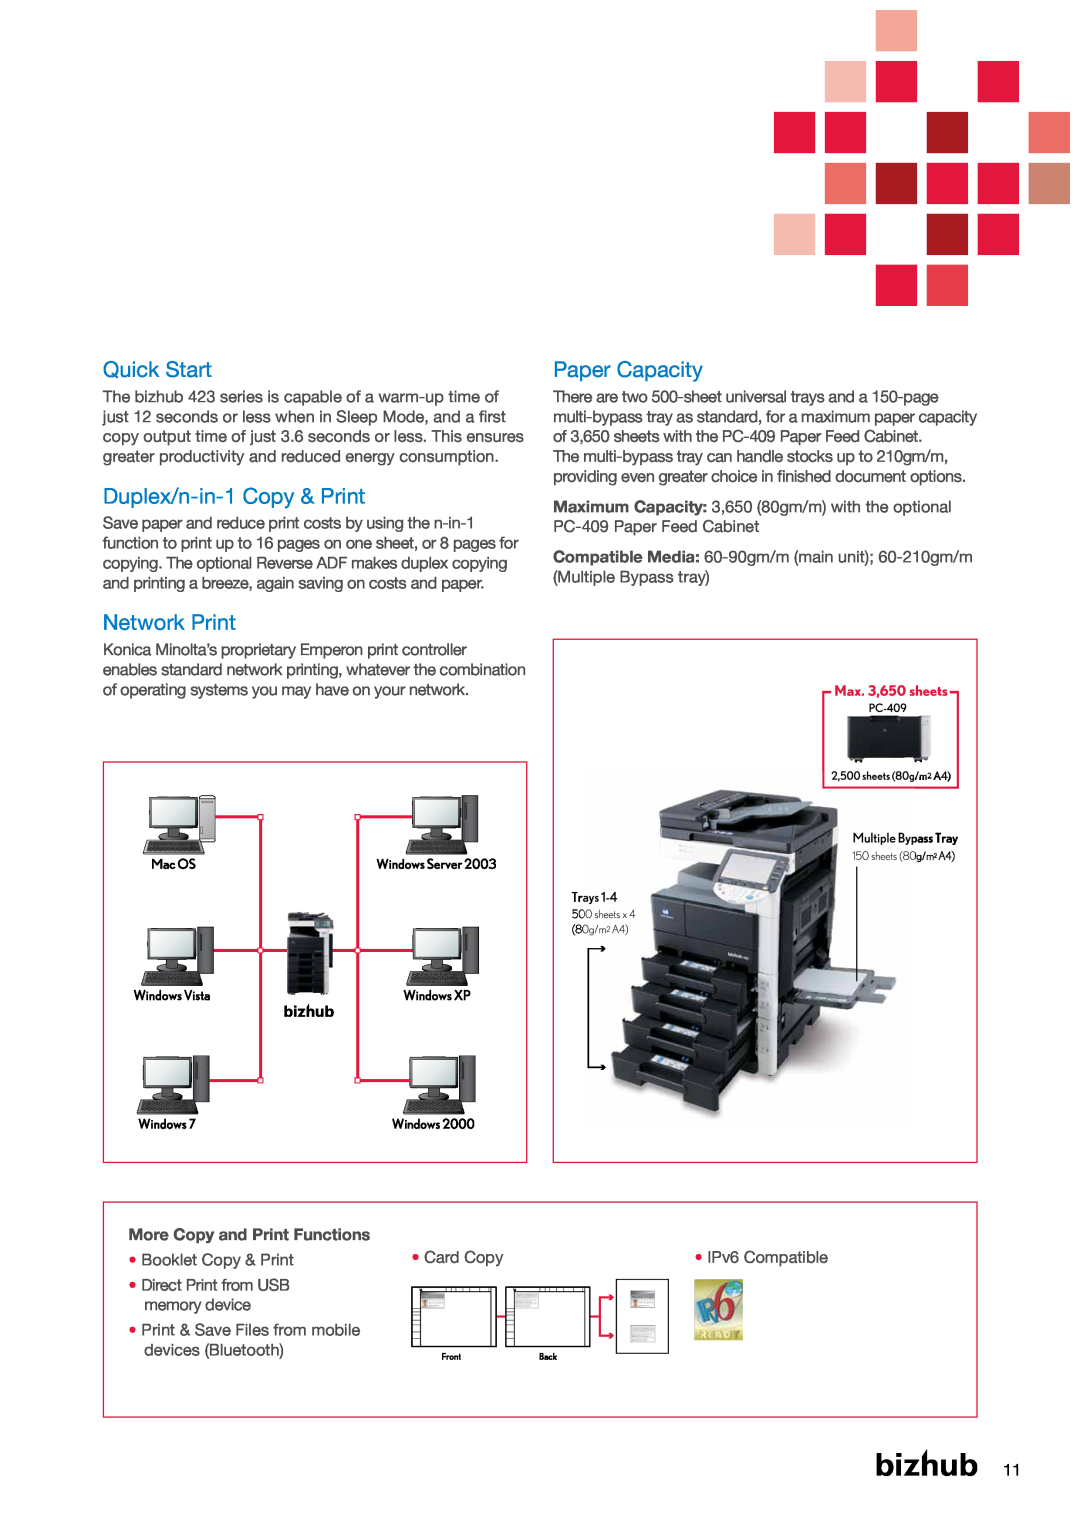 Konica Minolta 423 Quick Start, Duplex/n-in-1 Copy & Print, Network Print, Paper Capacity, More Copy and Print Functions 